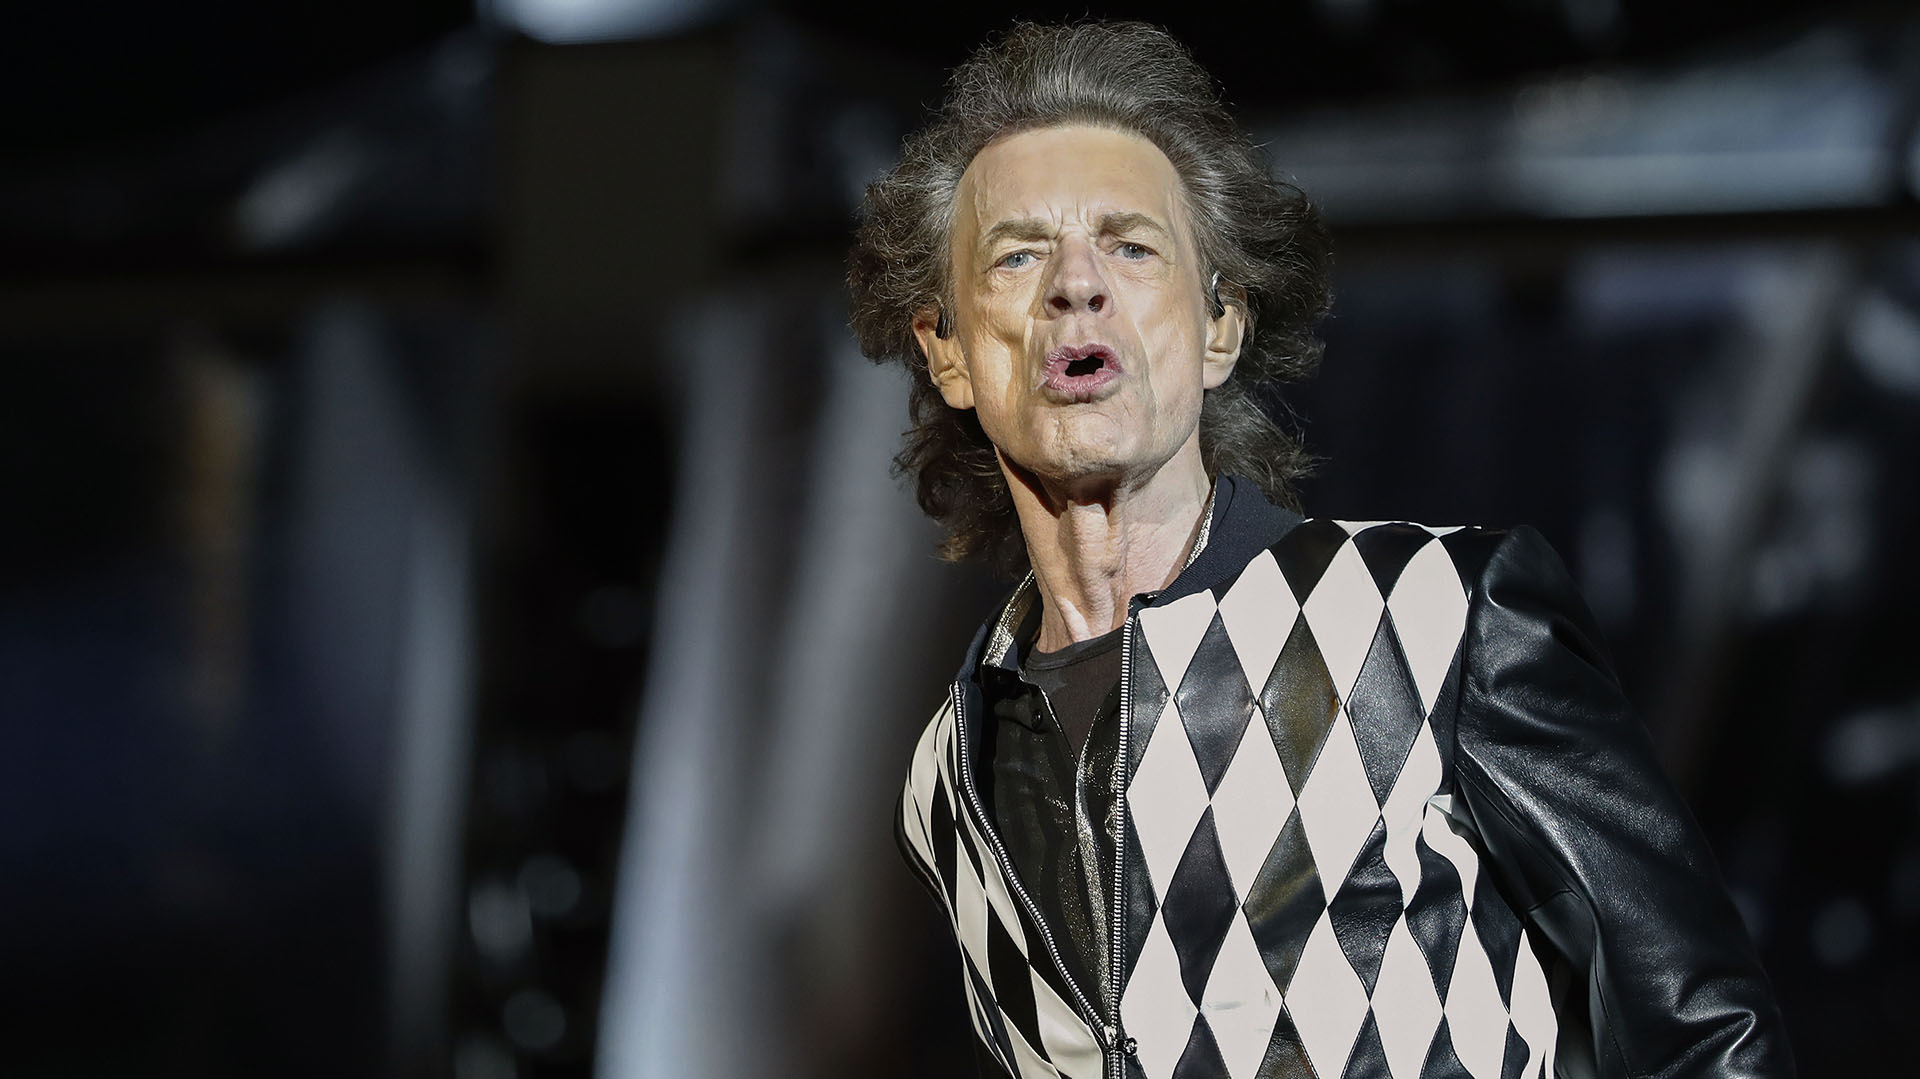 Mick Jagger, en la gira "No Filter Tour", en Chicago.  (foto AFP)